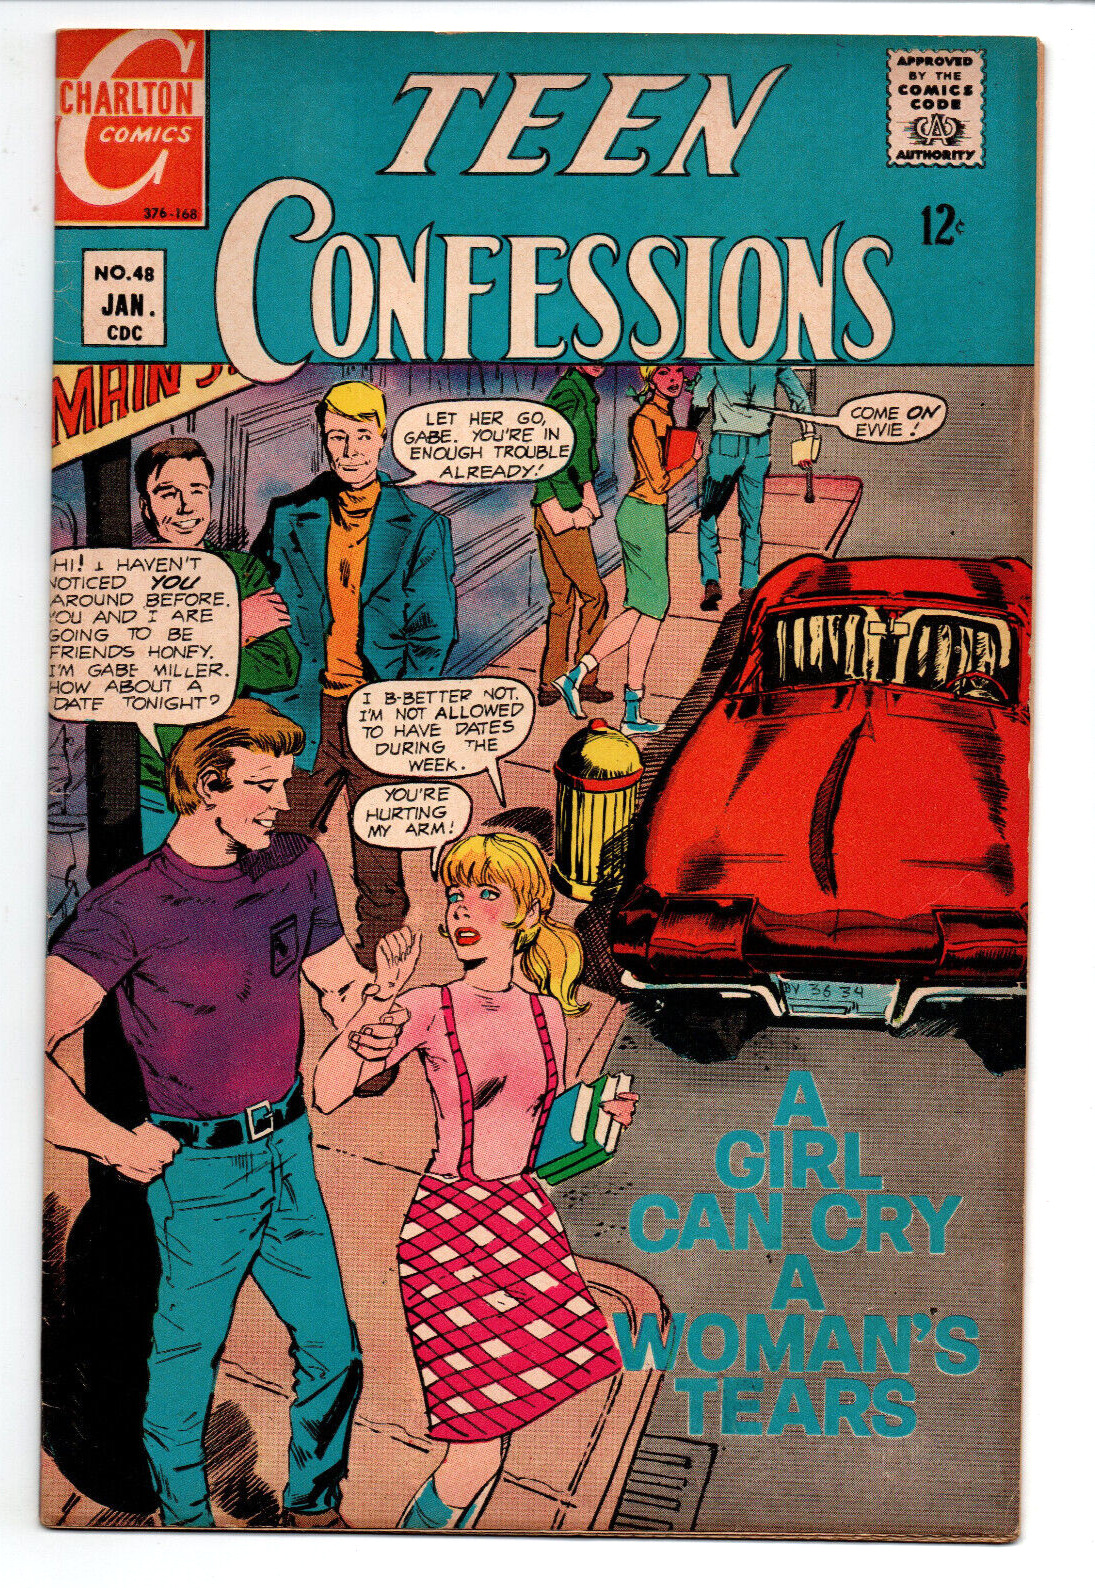 Teen Confessions #48 - corvette cover - Romance - Charlton - 1968 - FN